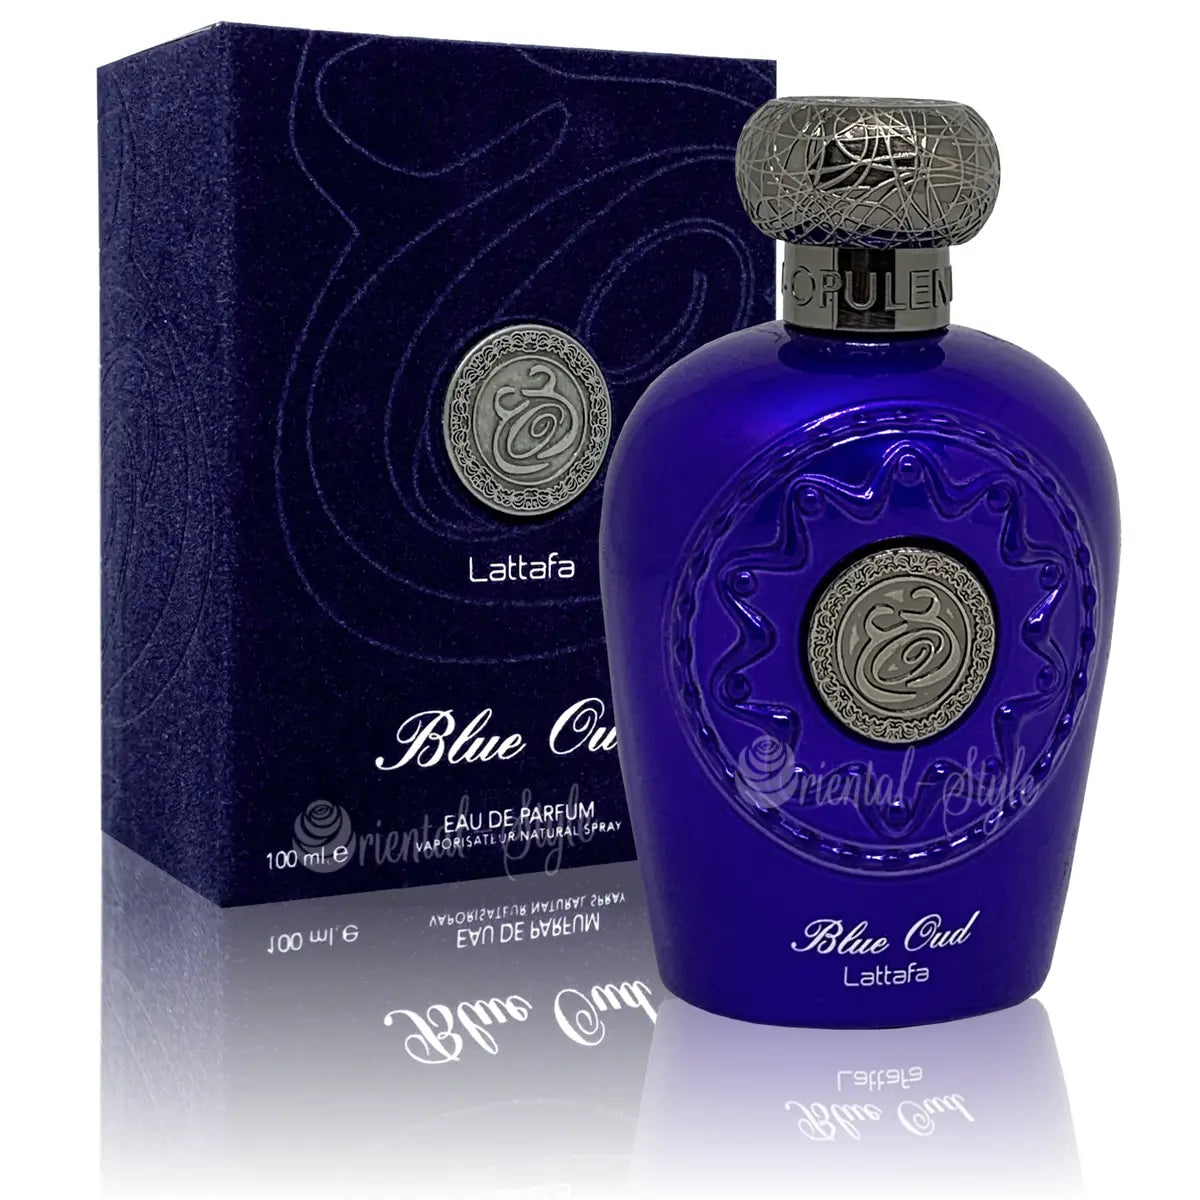 Lattafa Opulent Blue Oud - 100ml Eau De Parfum - Dapper Industries SA